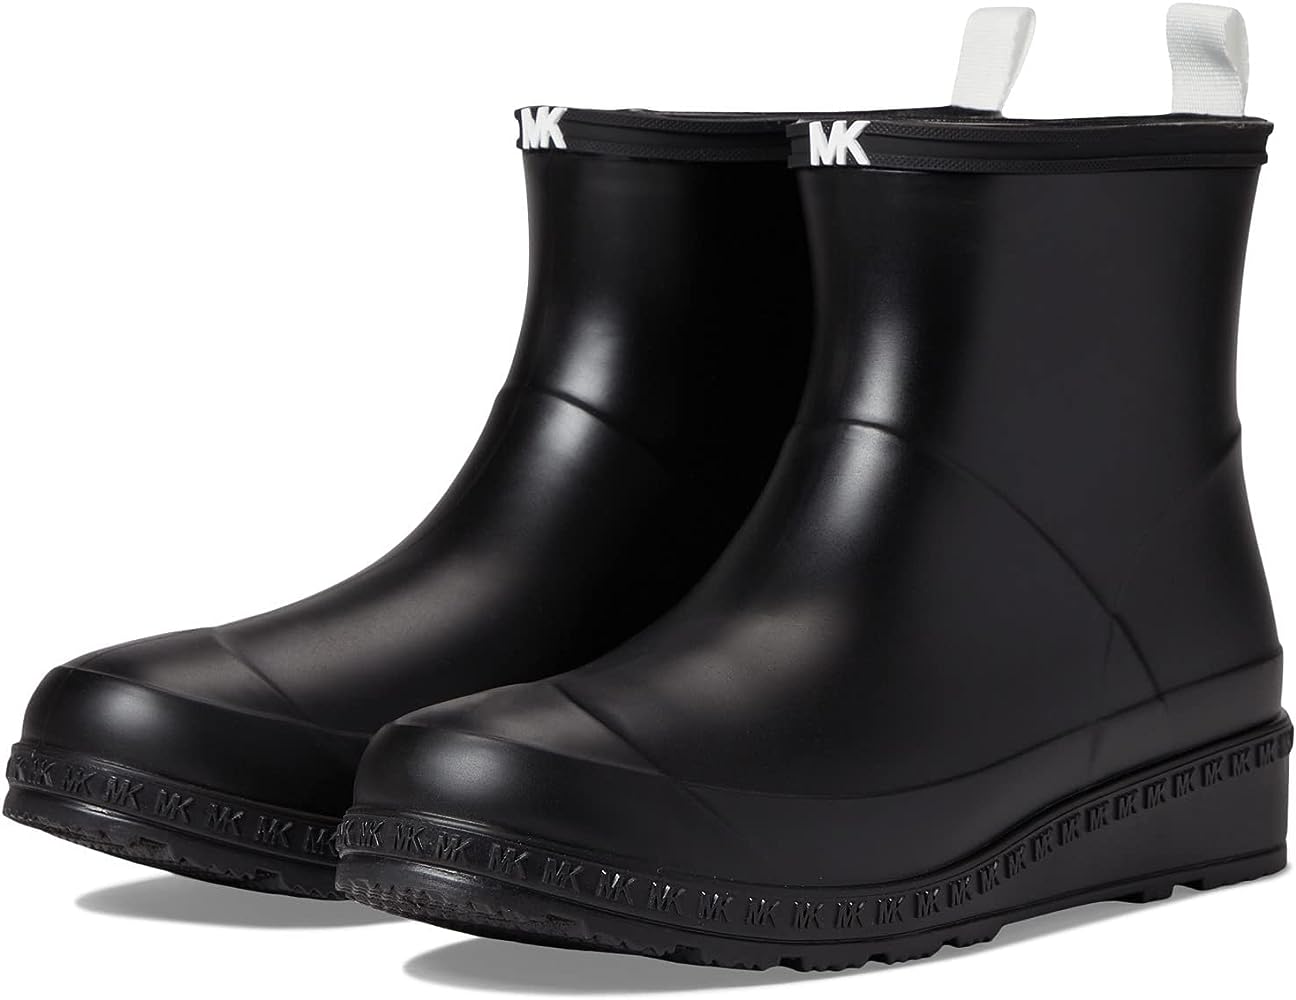 Michael kors boots size 38.5